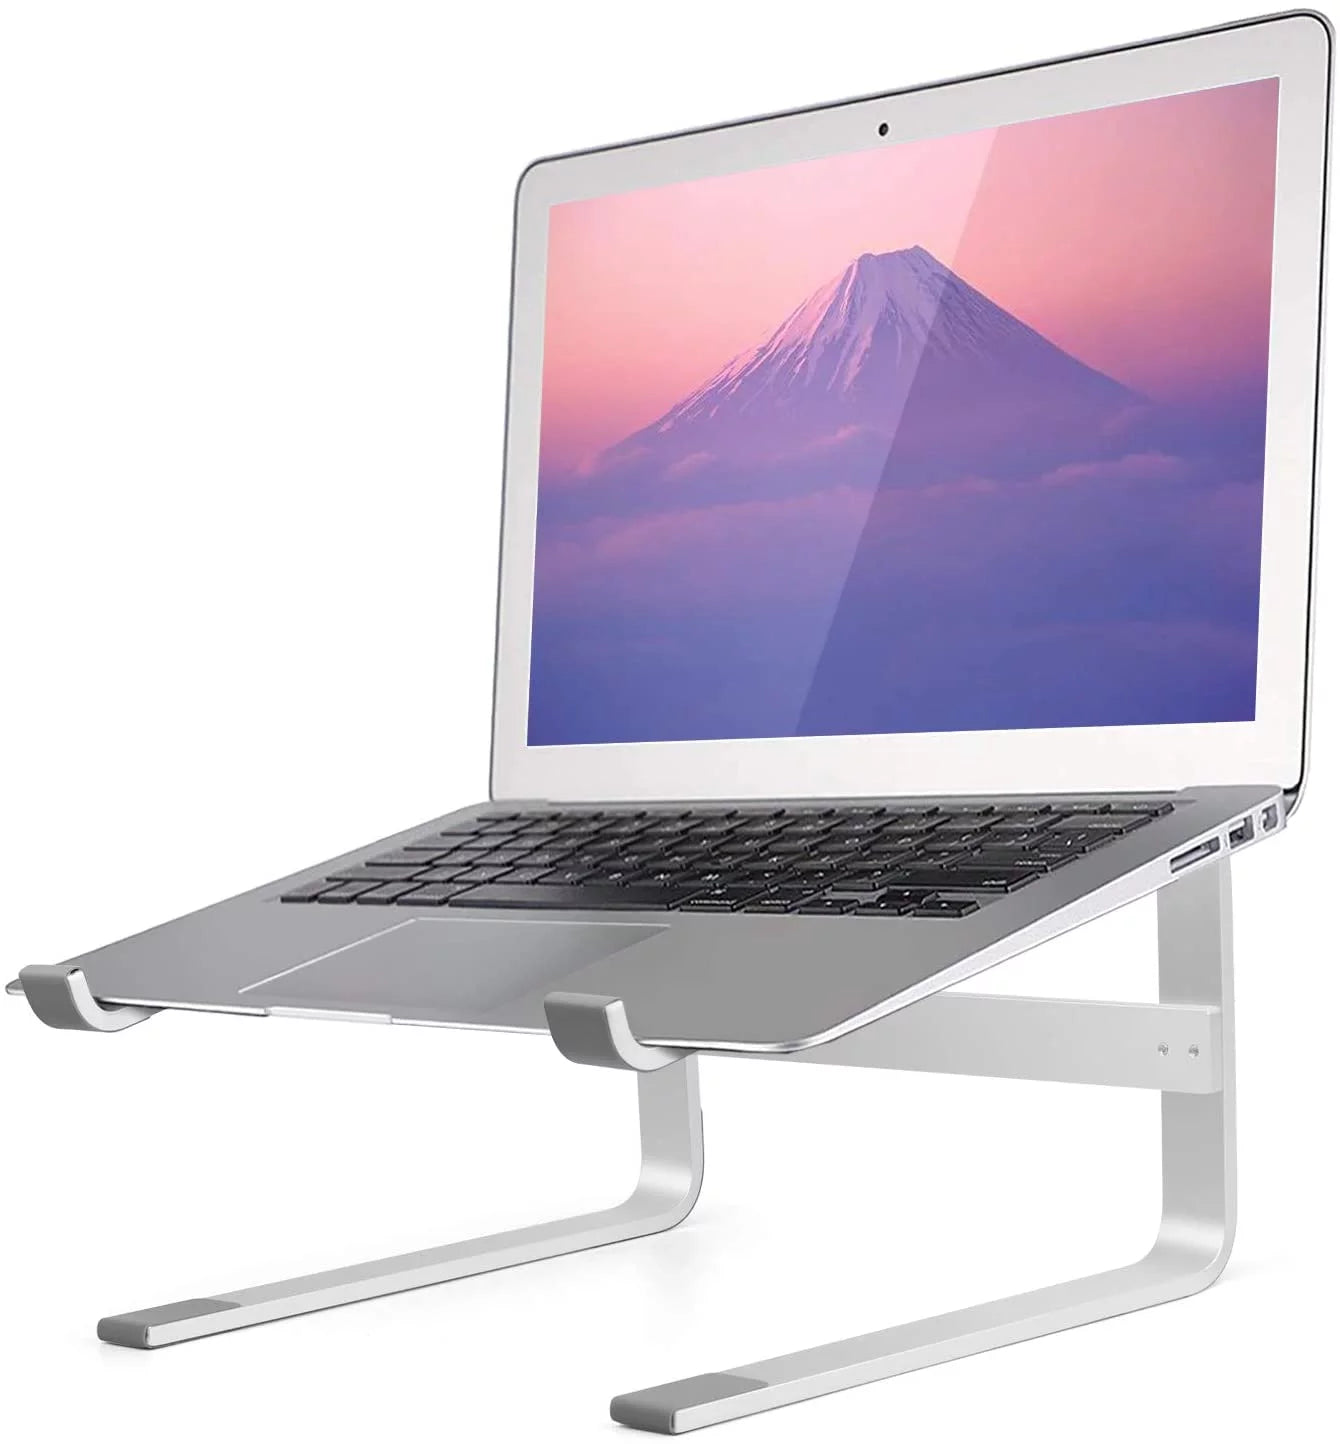 Laptop Stand Ergonomic Aluminum Laptop Mount Computer Stand for Desk, Detachable Laptop Riser Laptop Holder Compatible with All Macbook Air Pro between 10-17